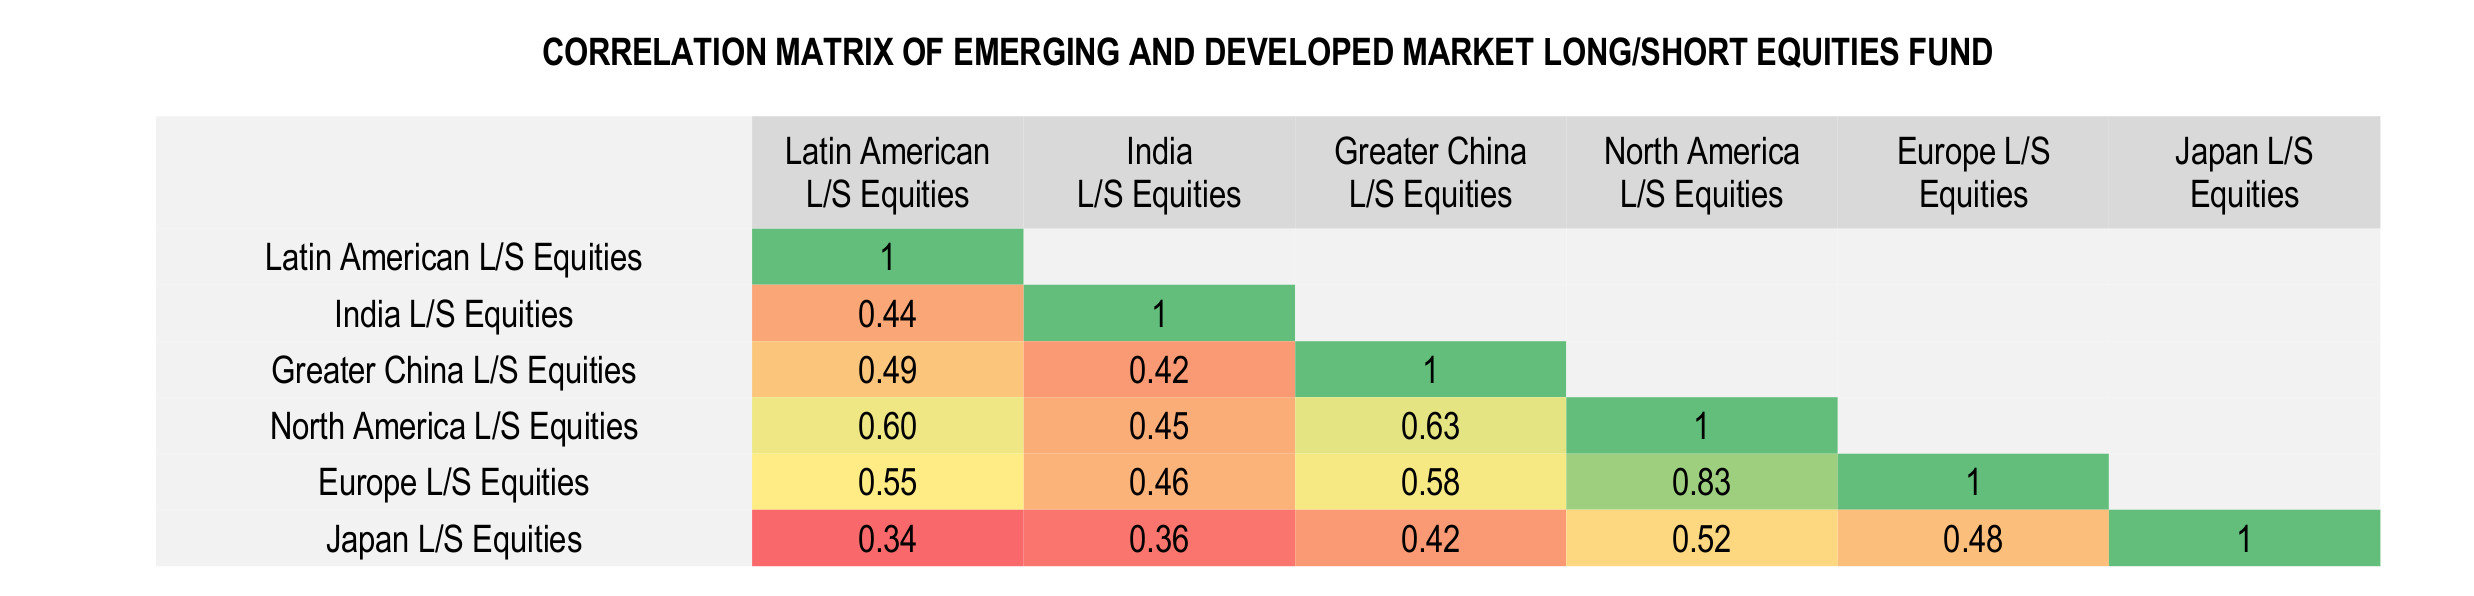 Emerging Market Hedge Funds Infographic November 2020 - Correlation Matrix